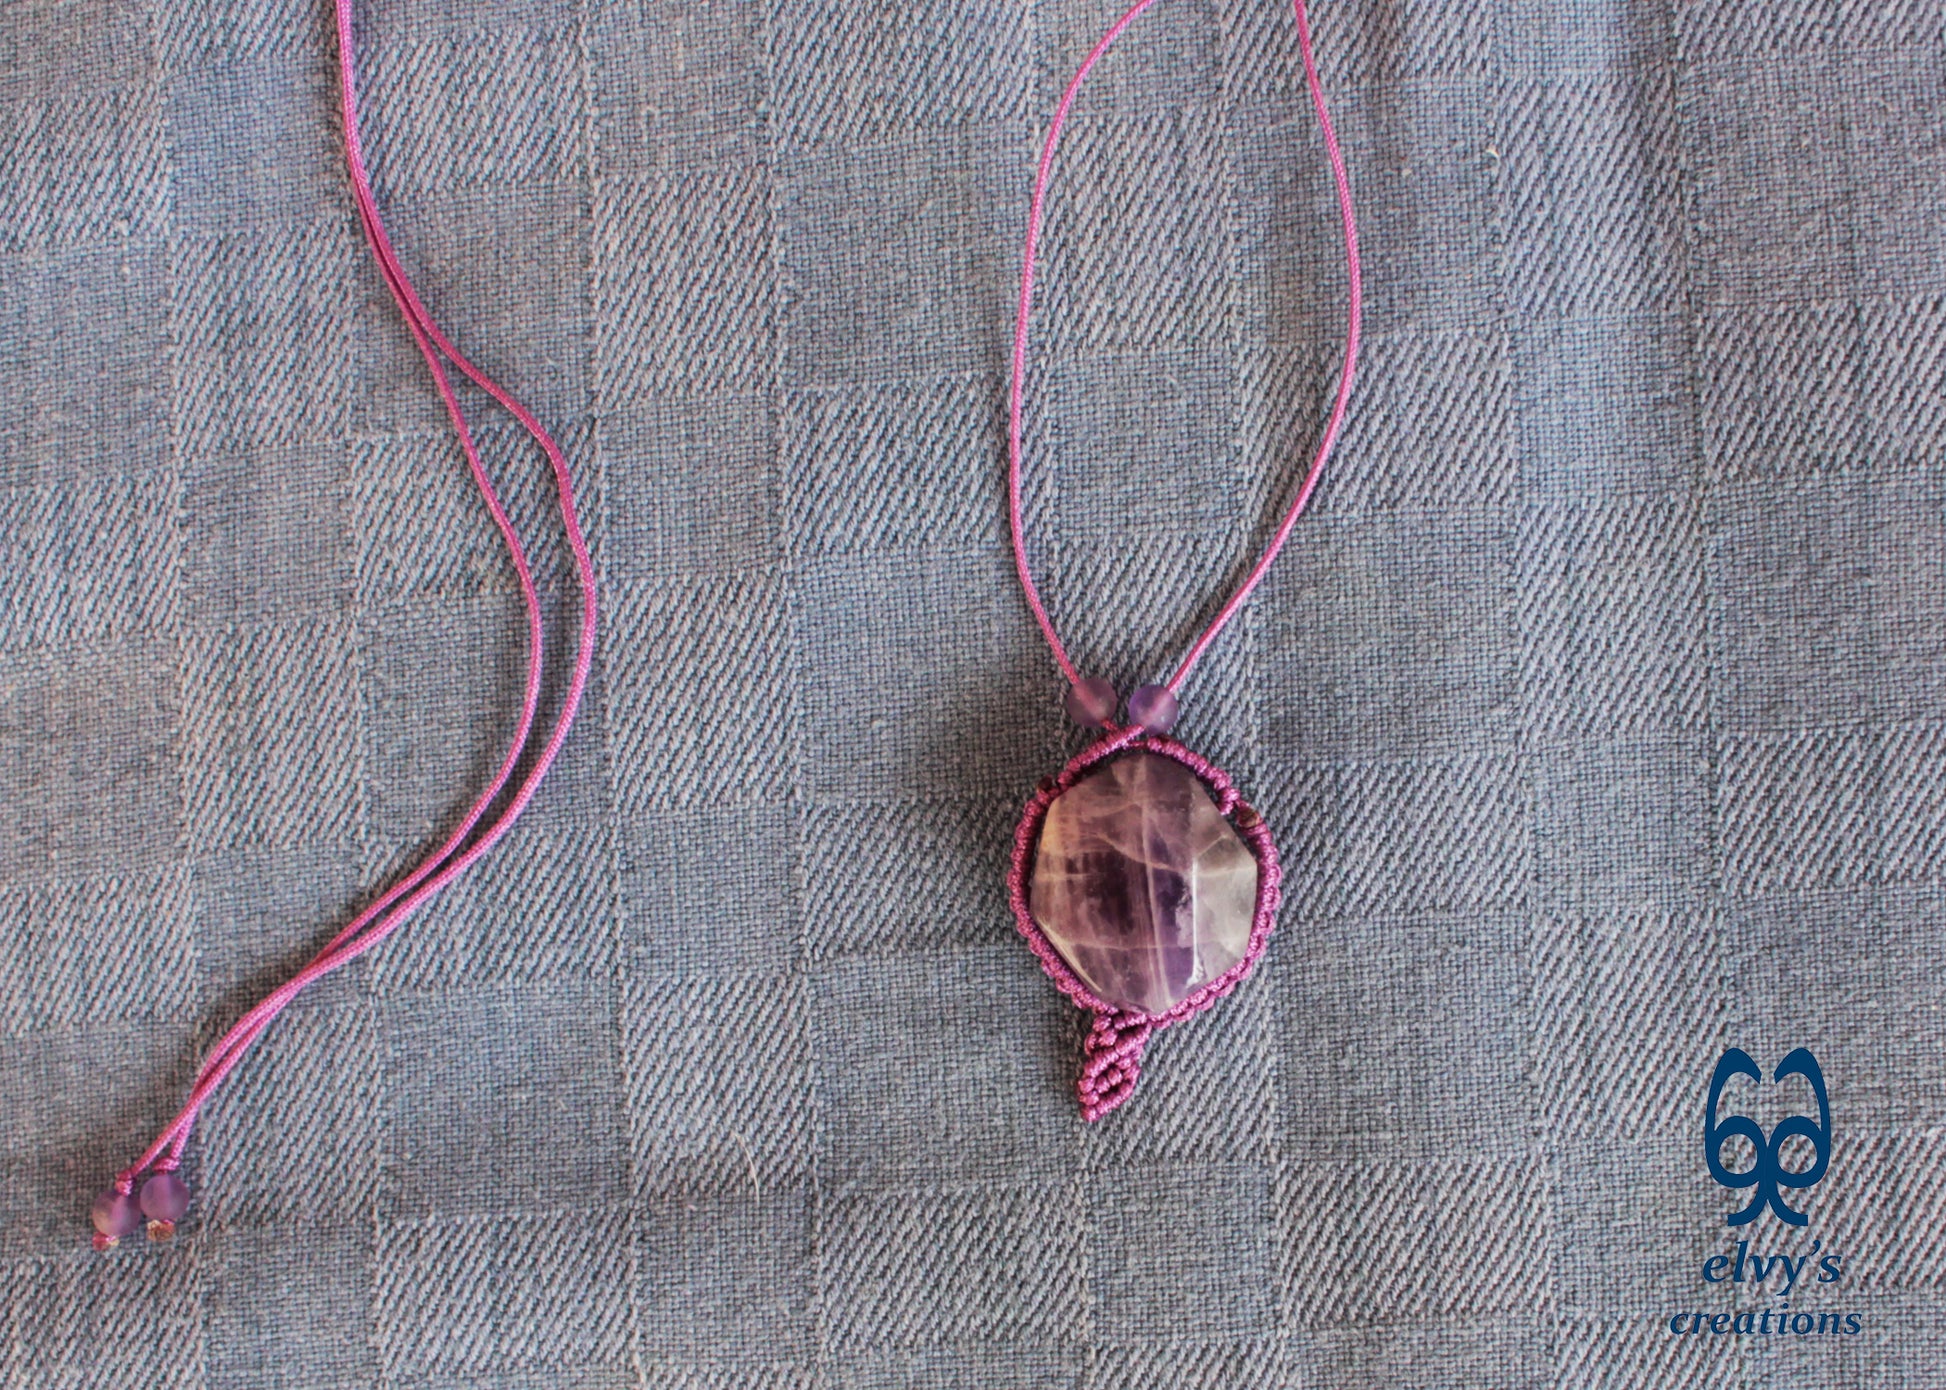 Handmade Unisex Purple Macrame Adjustable Necklace with Amethyst Gemstones